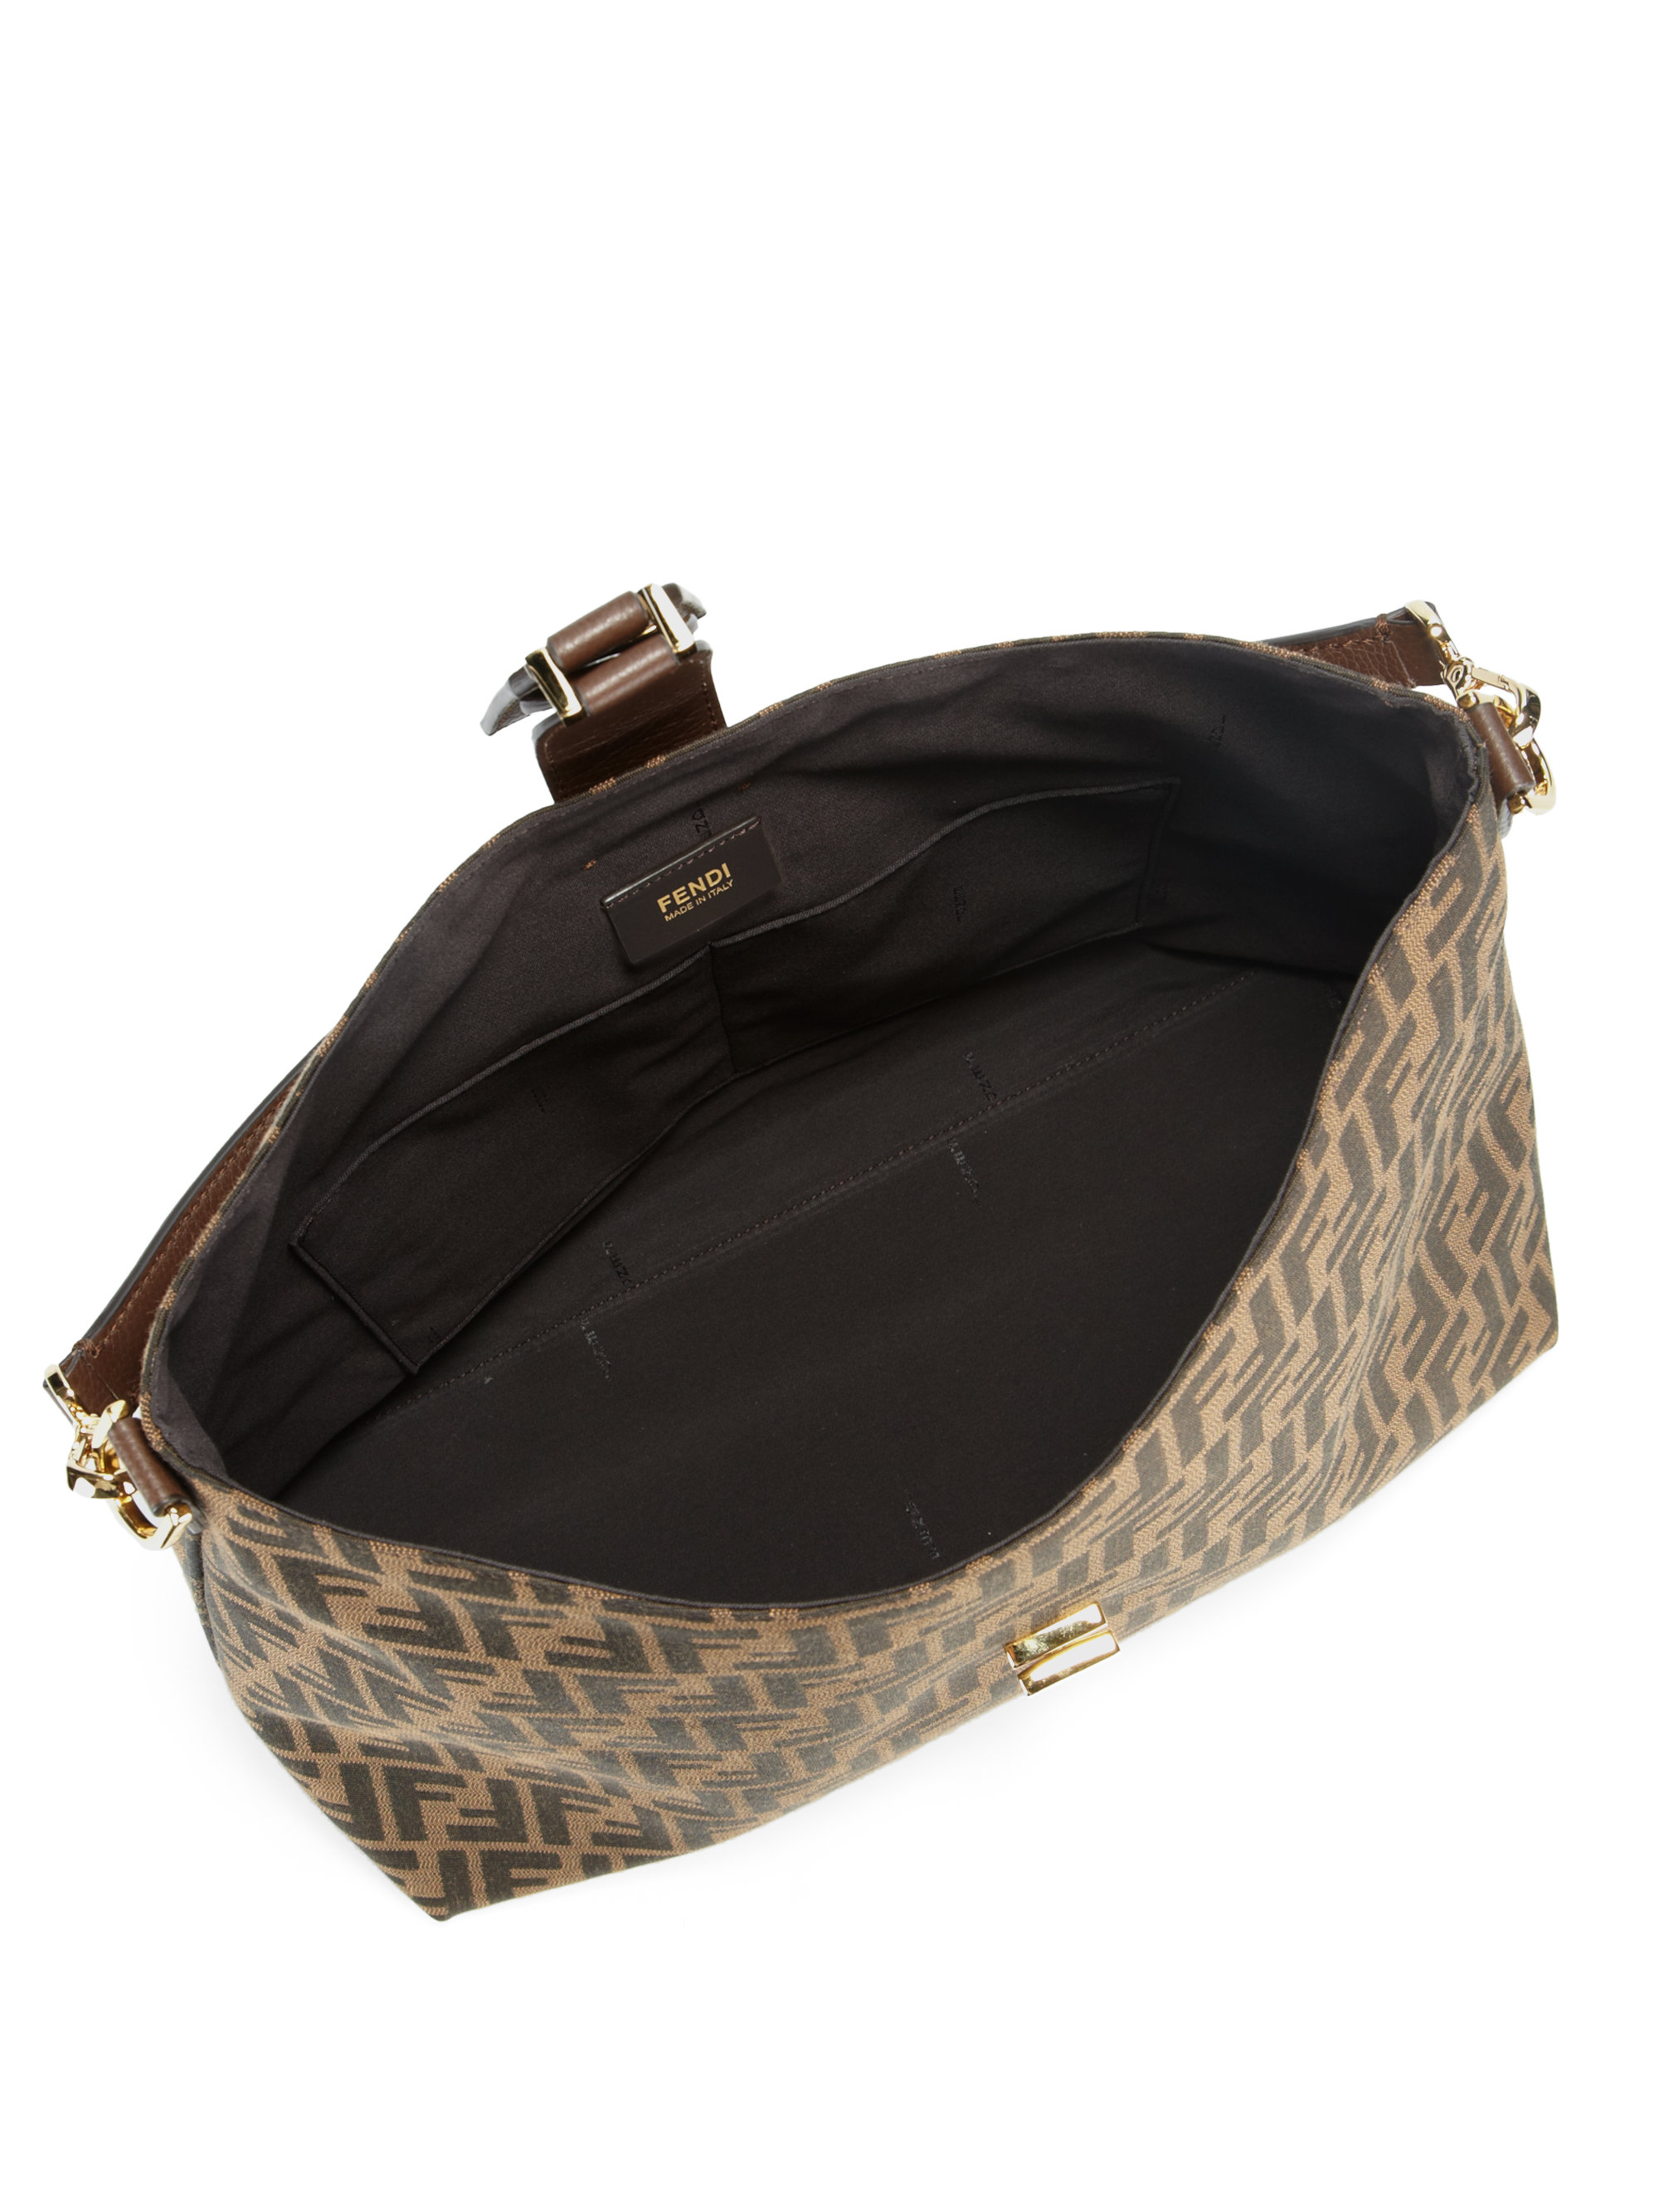 Fendi Zucca Small Hobo Bag in Brown | Lyst